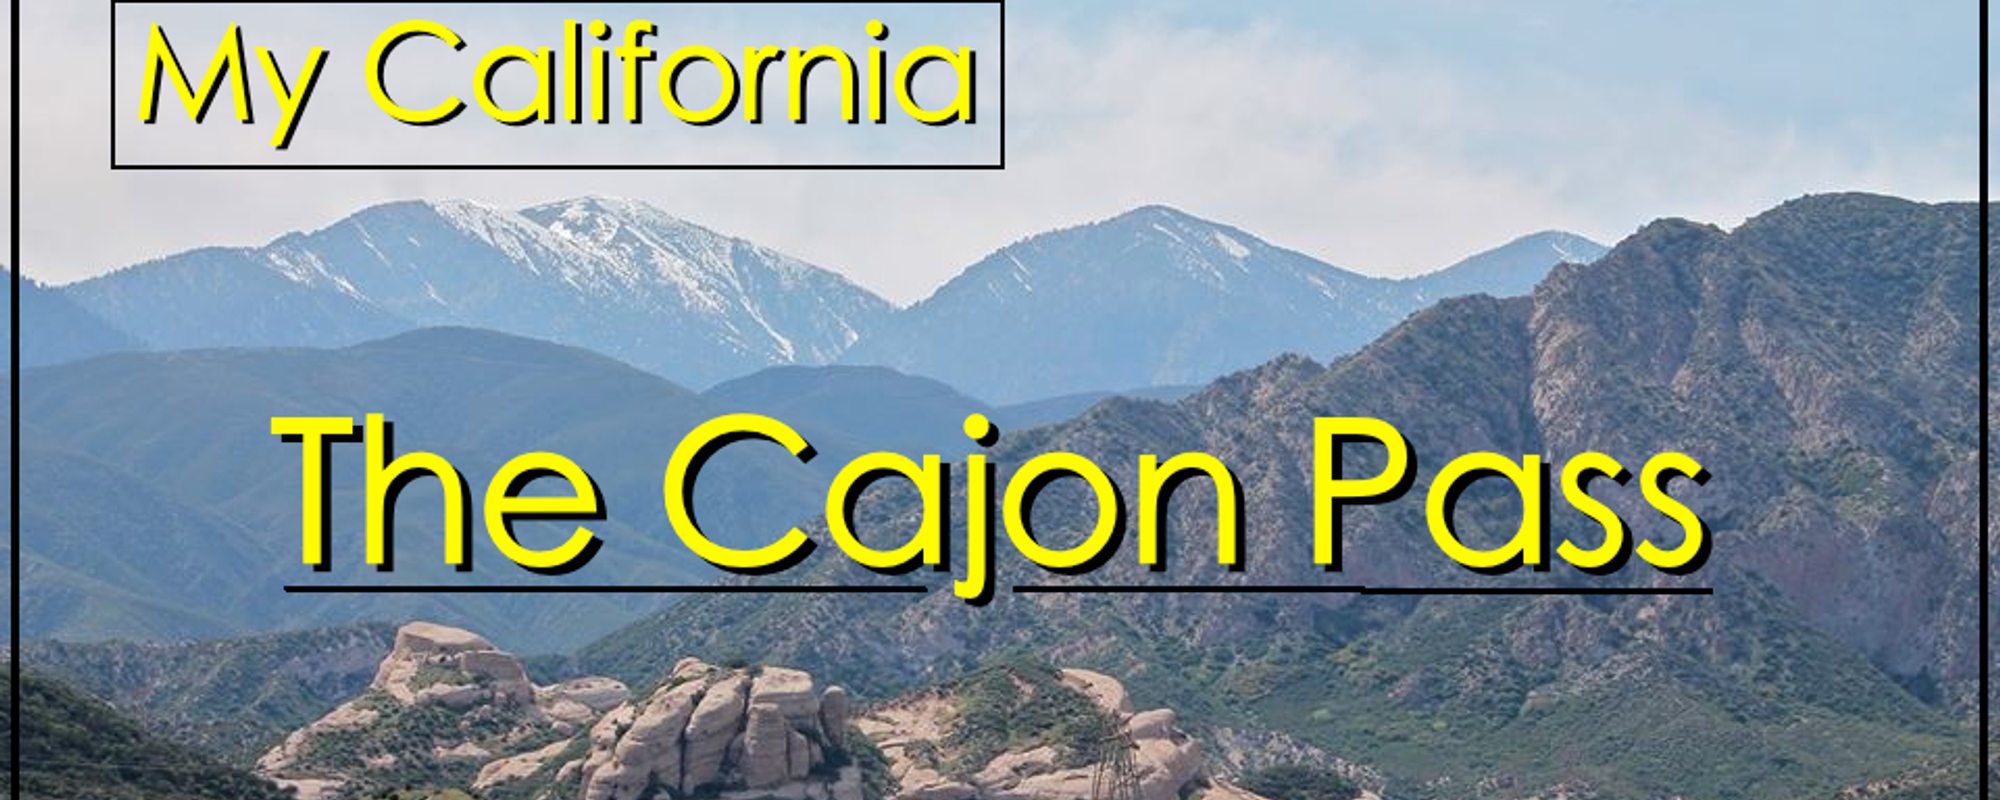 My California - The Cajon Pass